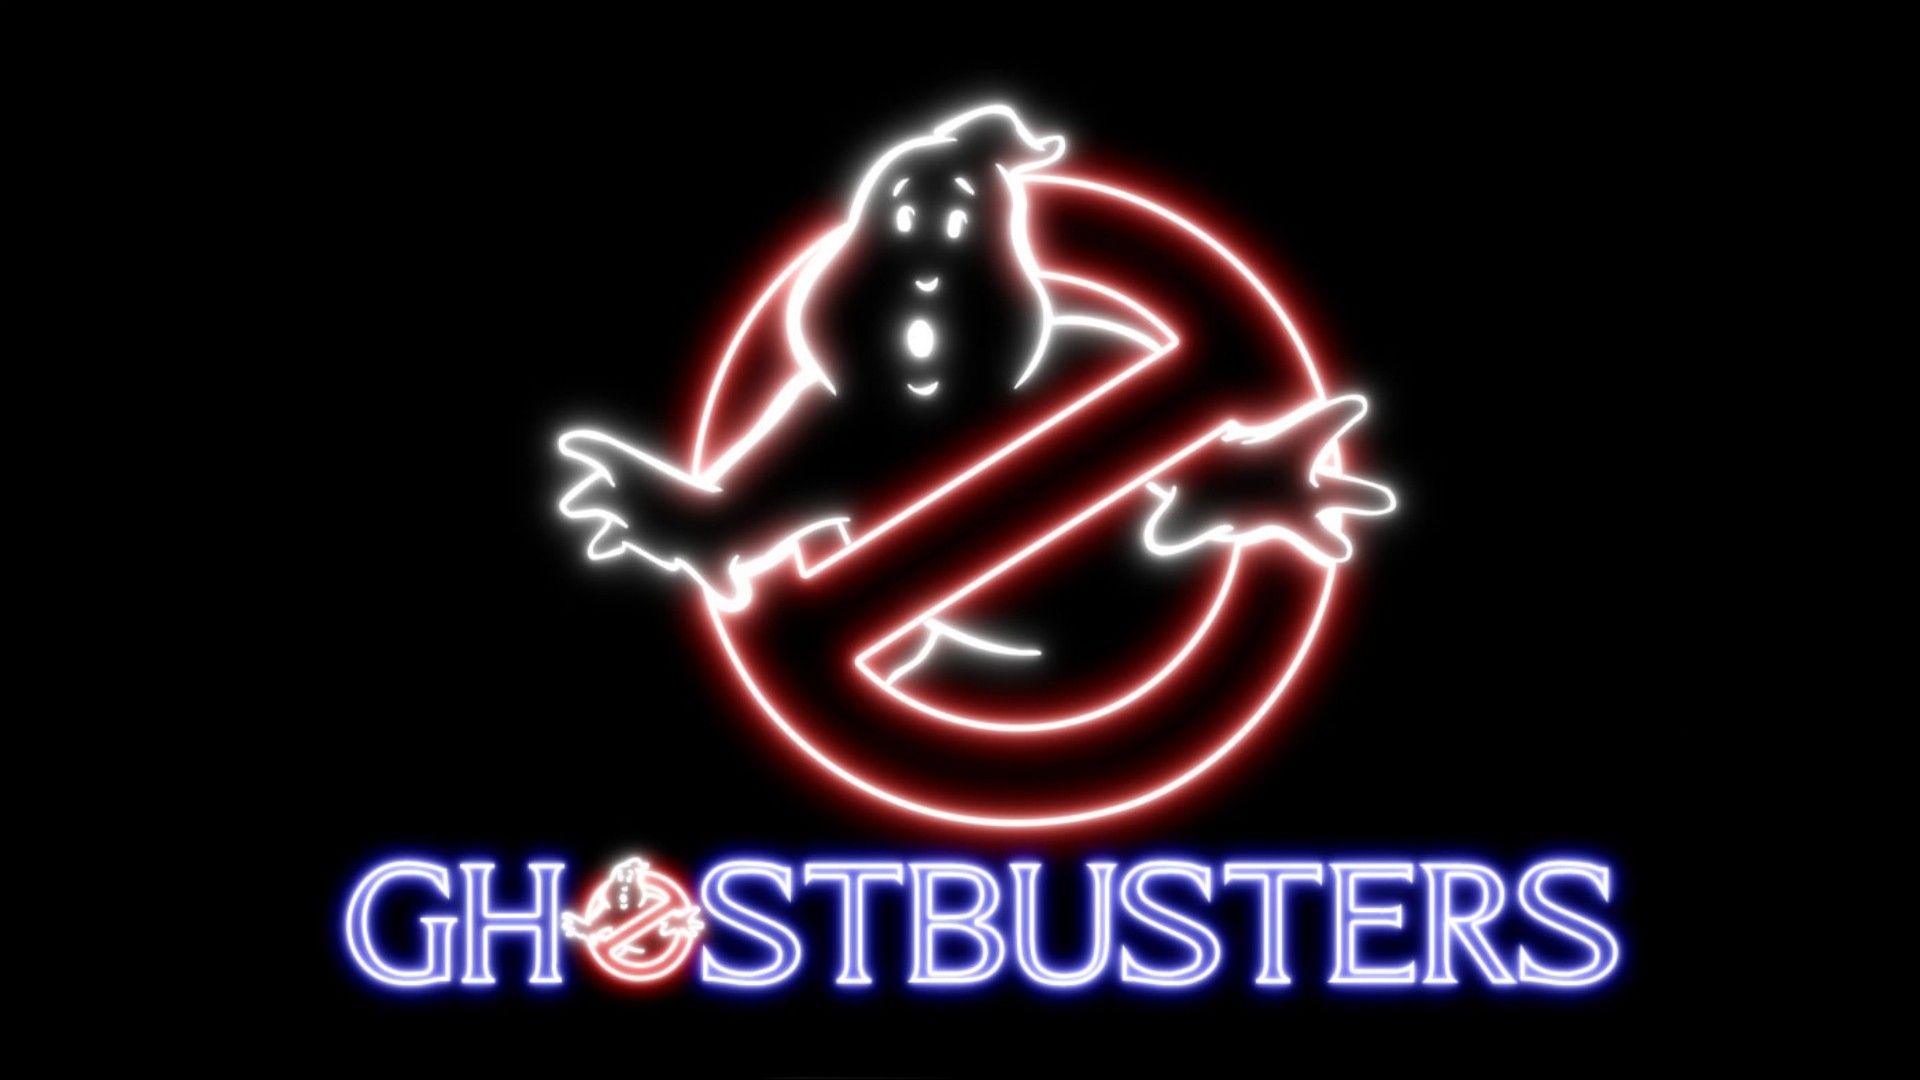 Ghostbusters wallpaper 127020